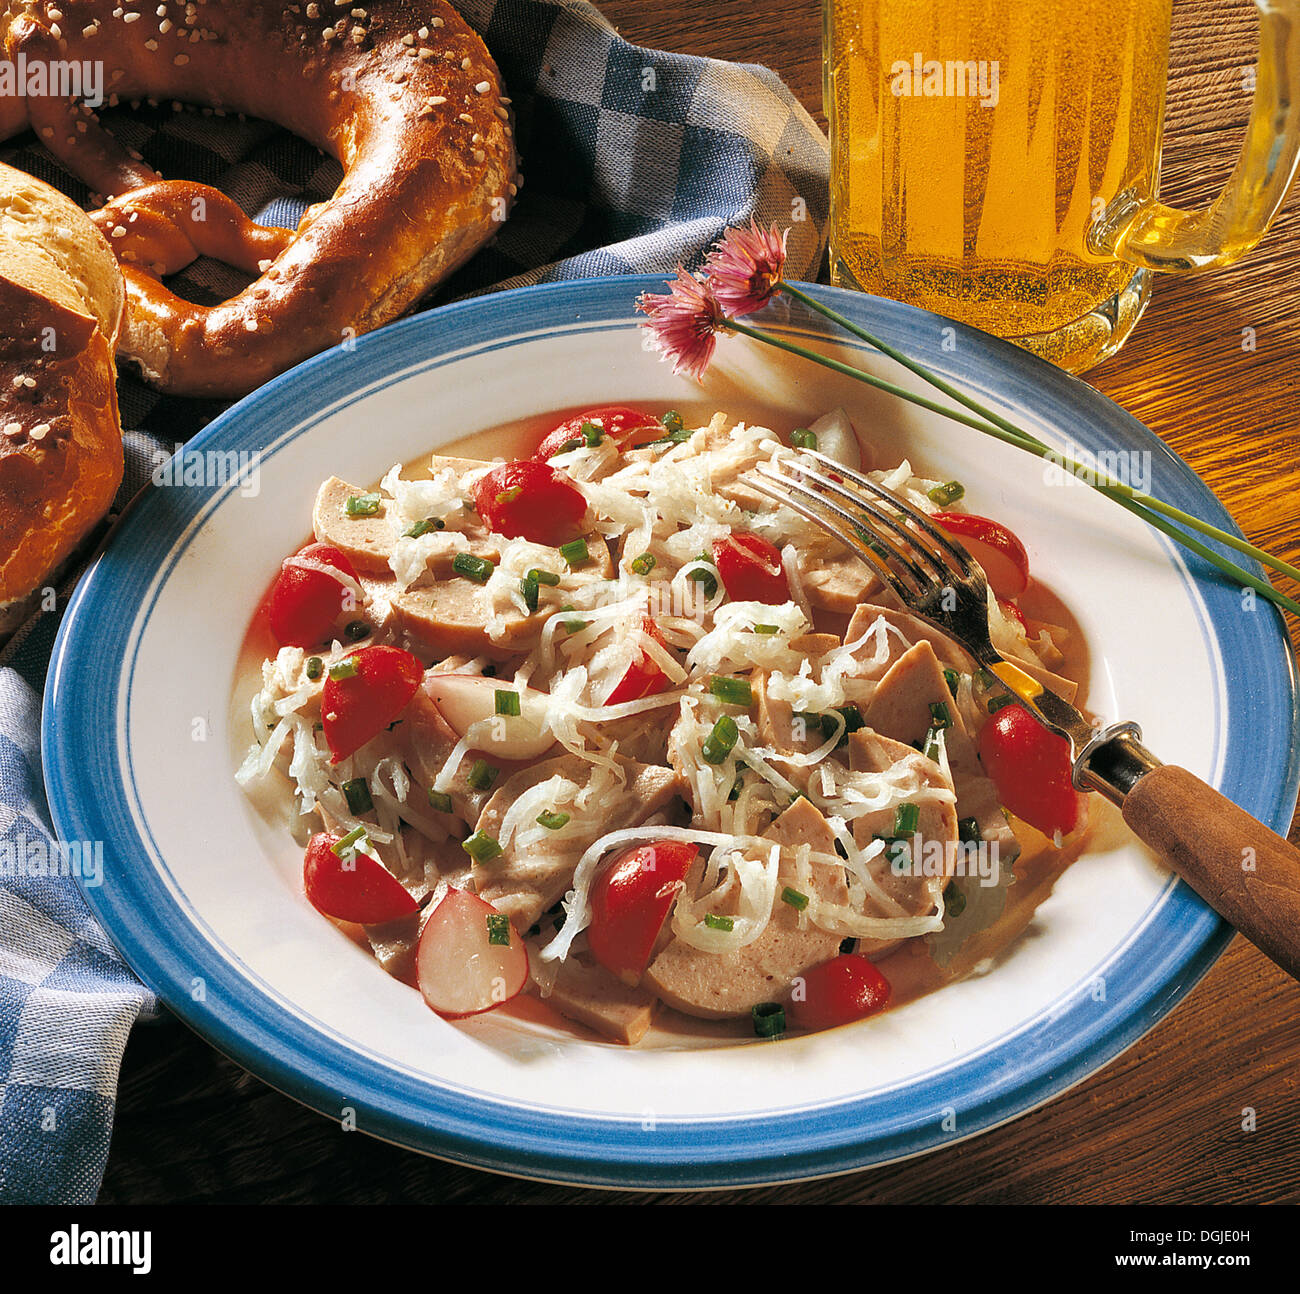 Bavarian sausage salad with radish, mild pork sausage and radish, delicious salads, Germany. Stock Photo